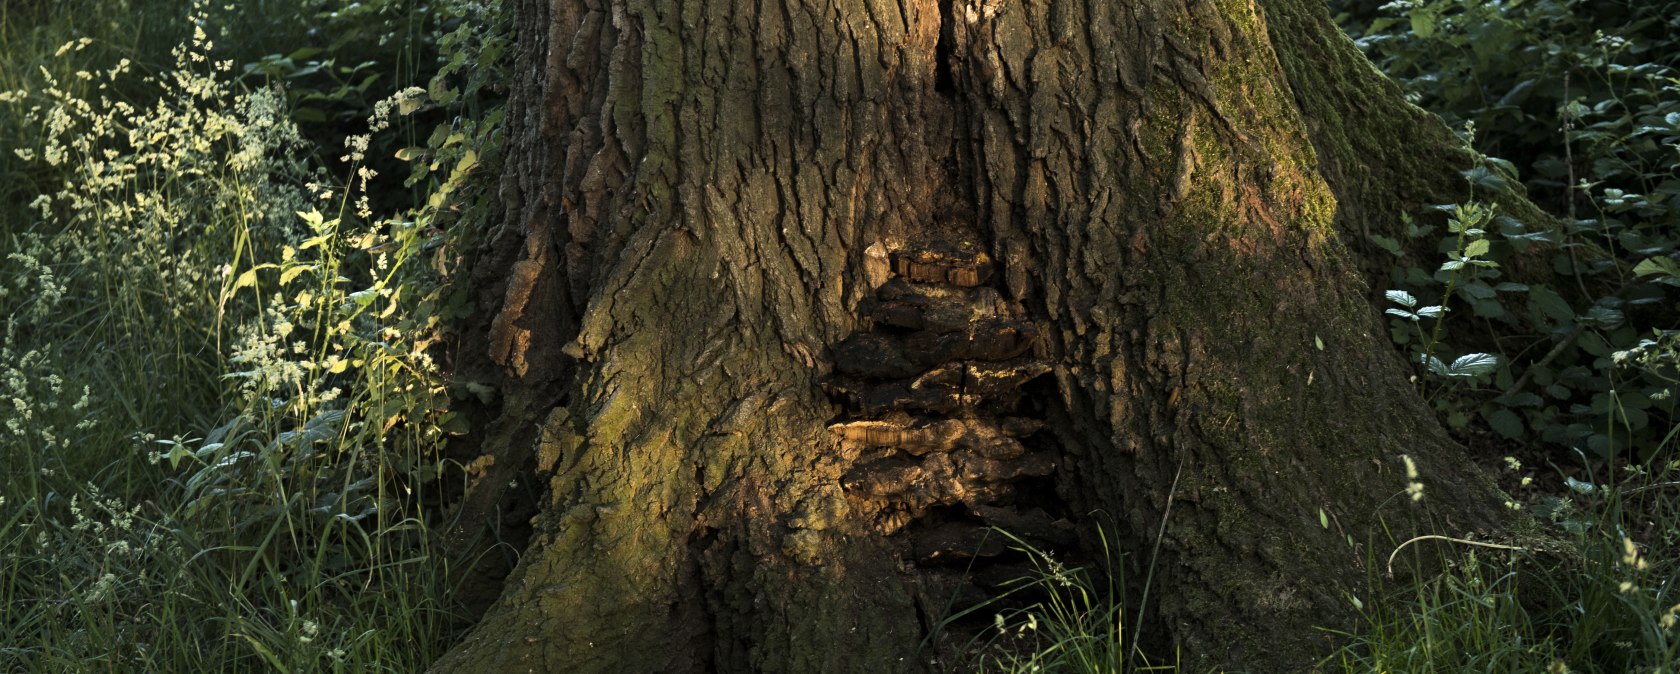 Baum mit Pilz, © Kappest/Vulkanregion Laacher See